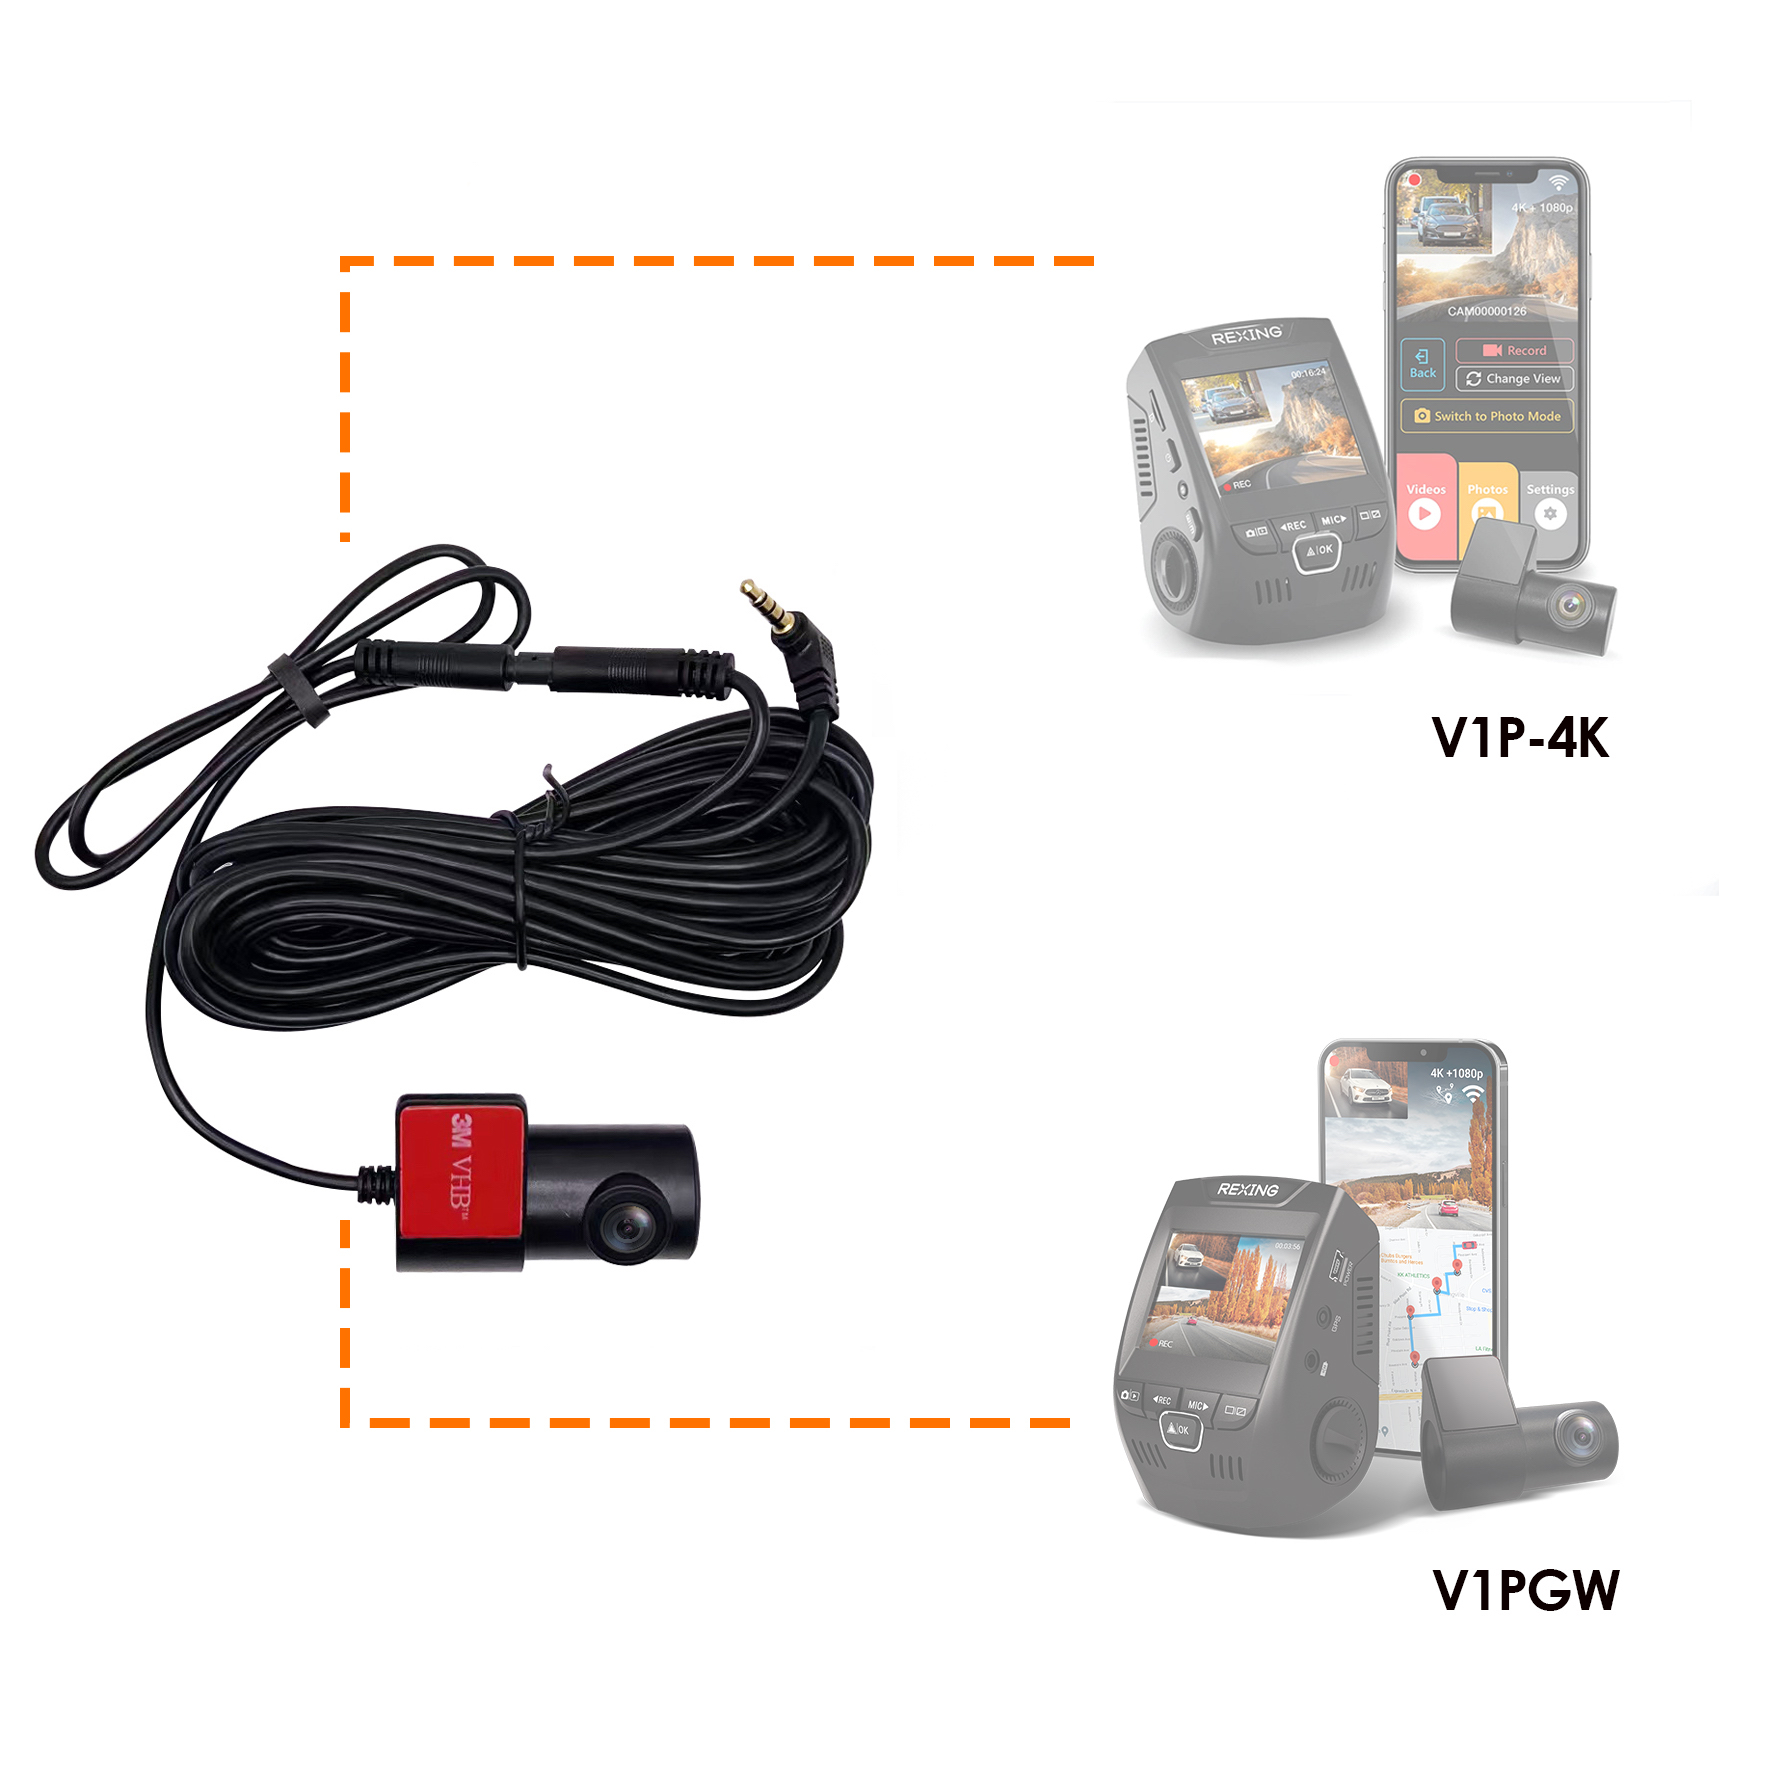 Rexing Rear Camera for V1P-4K and V1PGW-4K Dash Cams